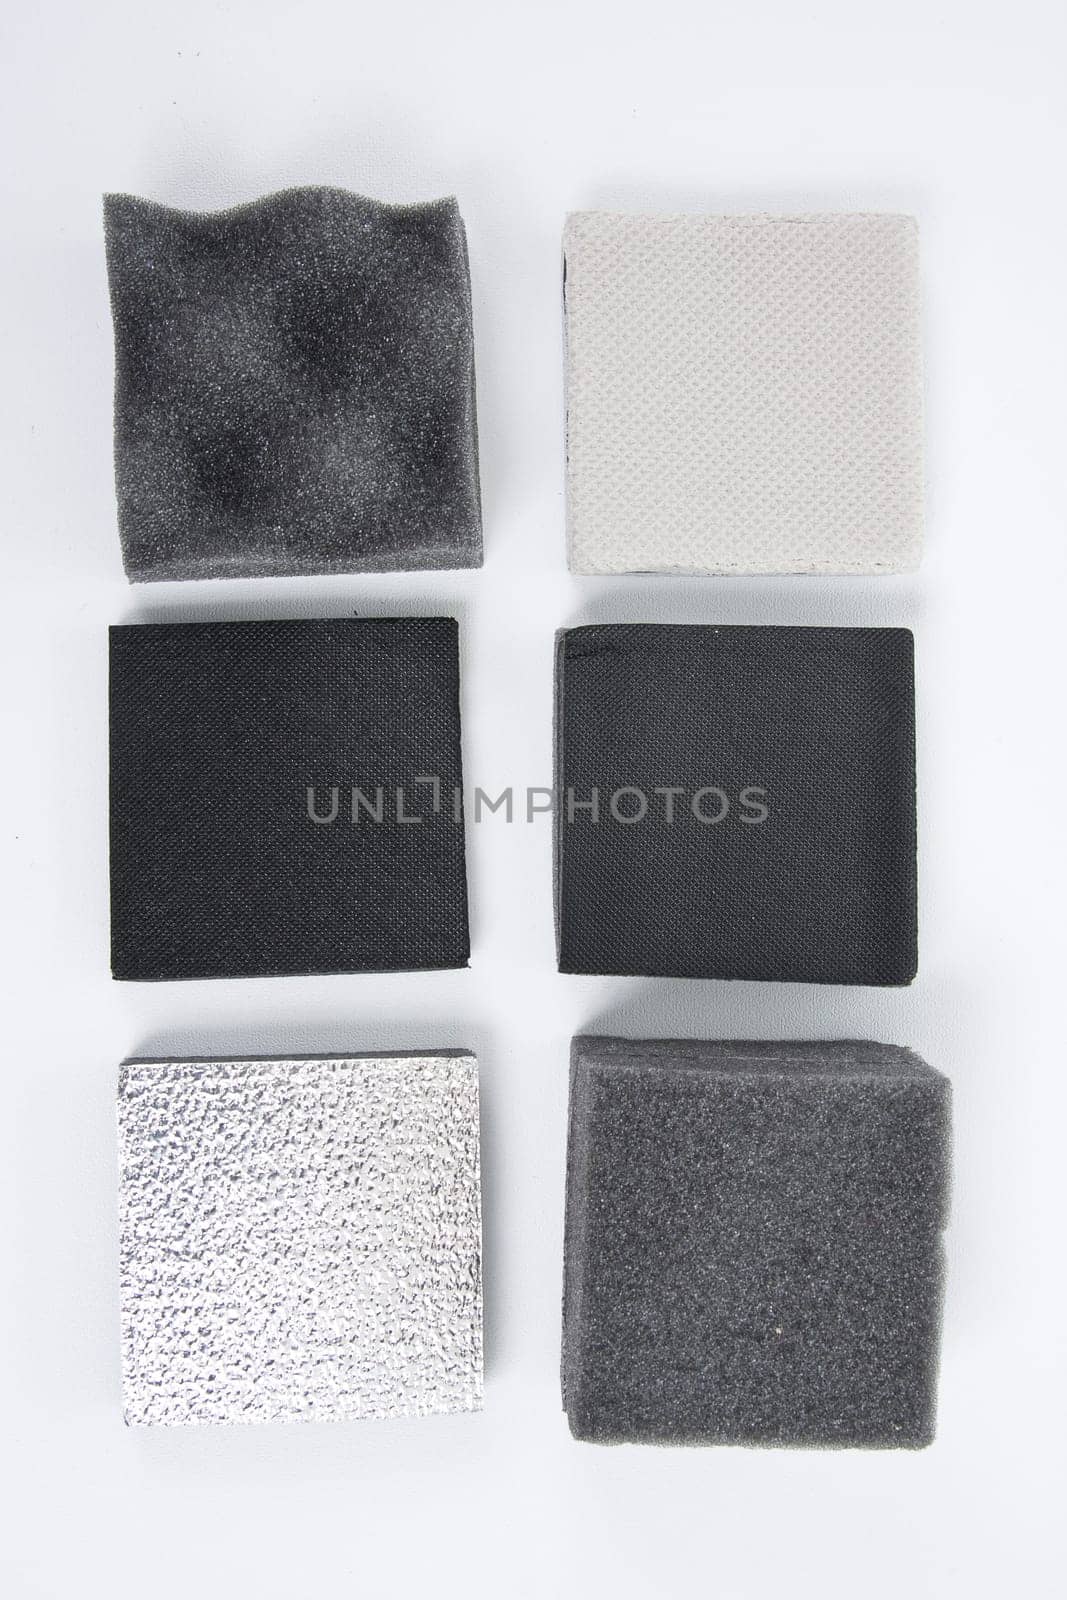 Roll of gray foam rubber sheet isolated in white by emirkoo